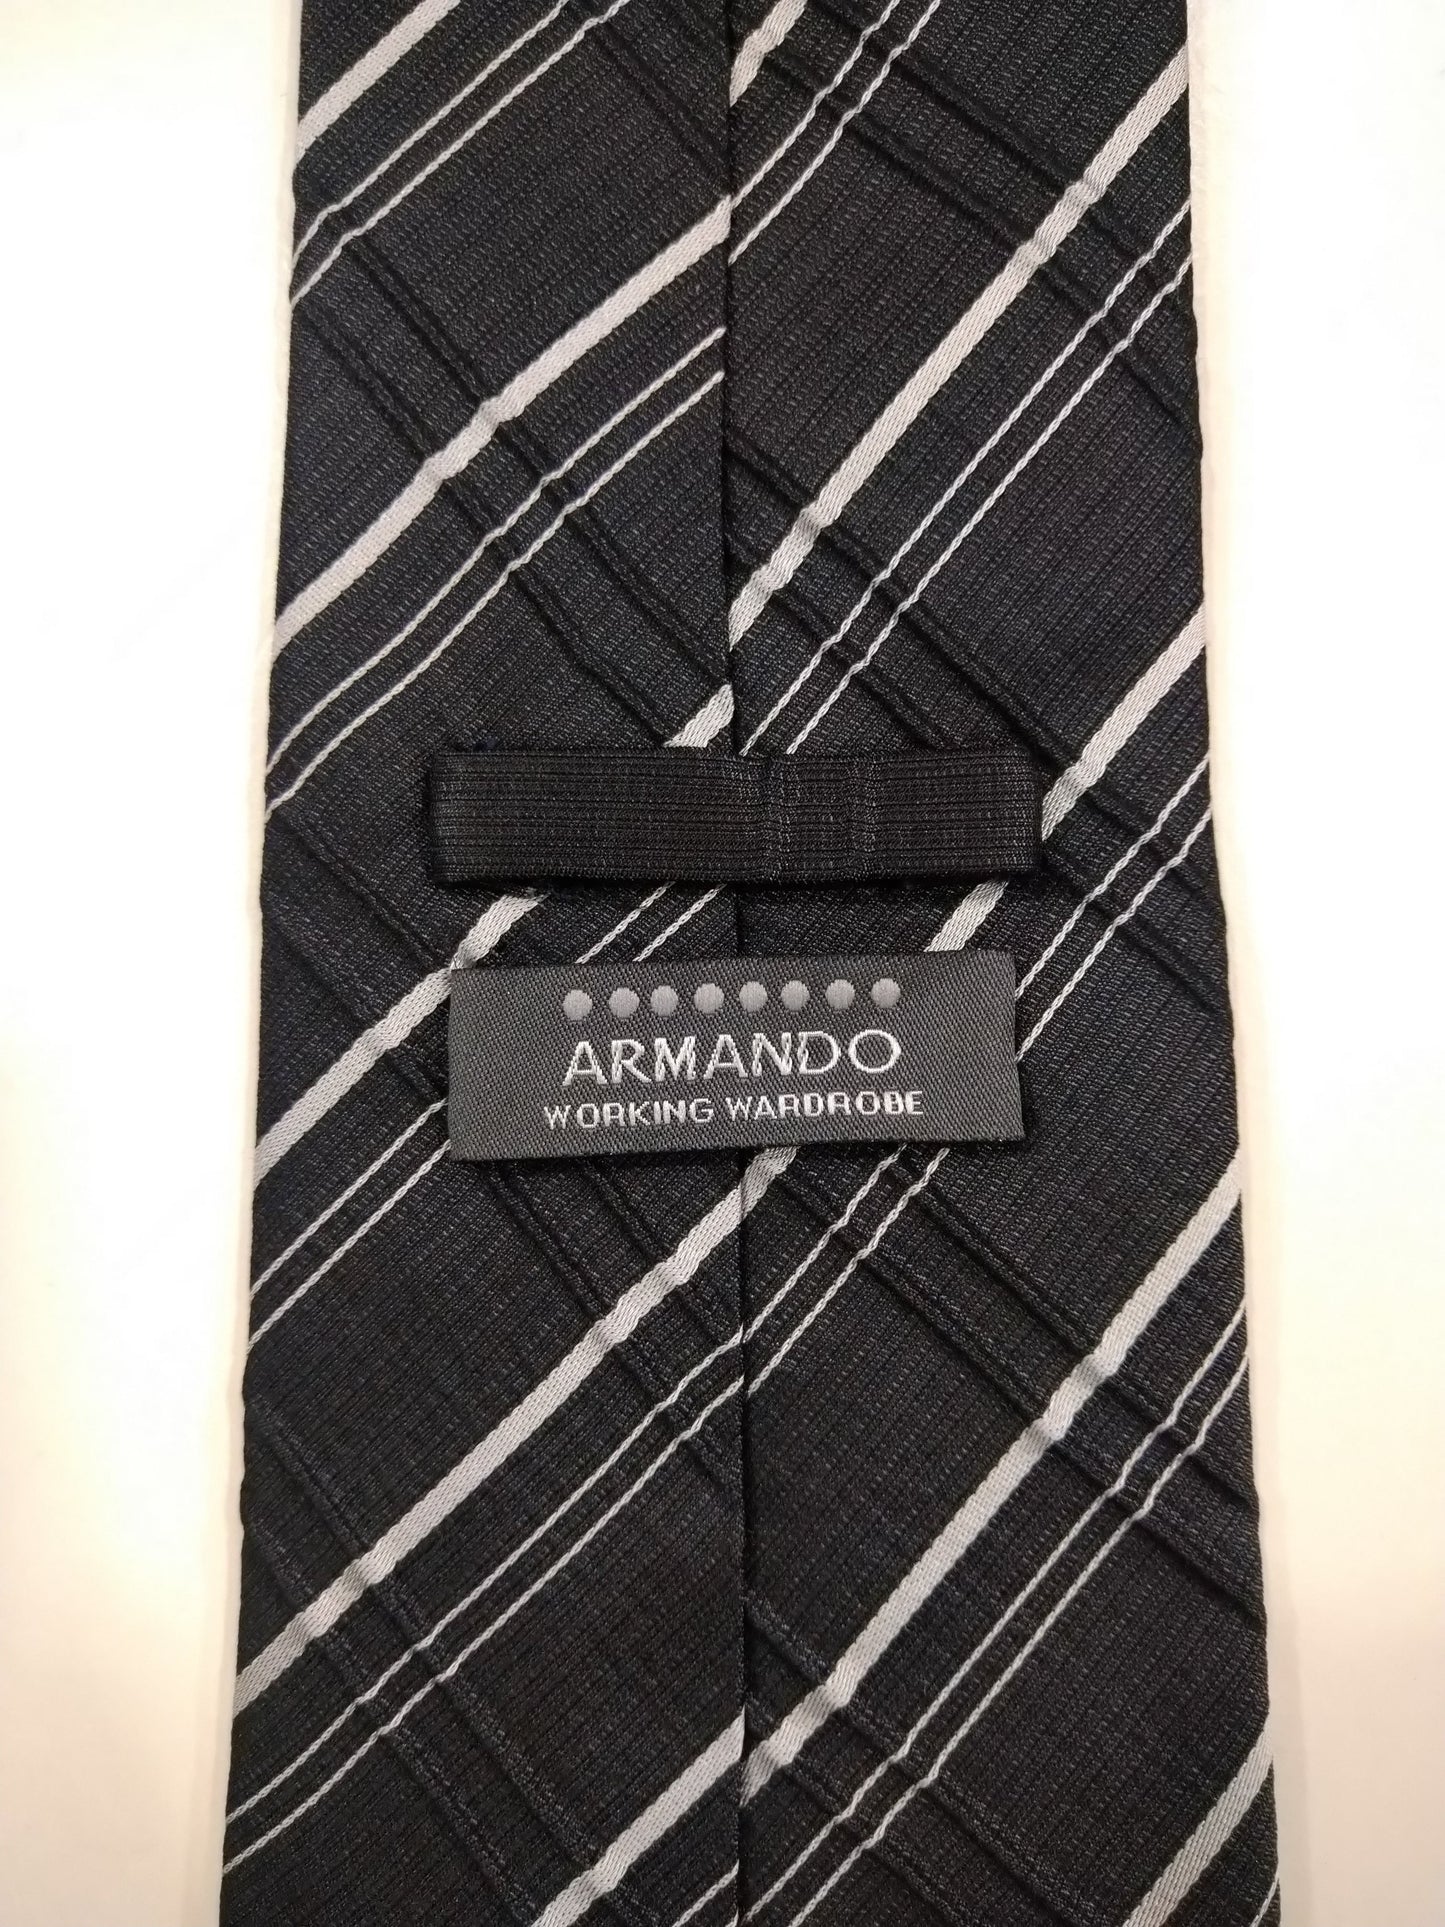 Armando silk tie. Beautiful black gray tangible motif